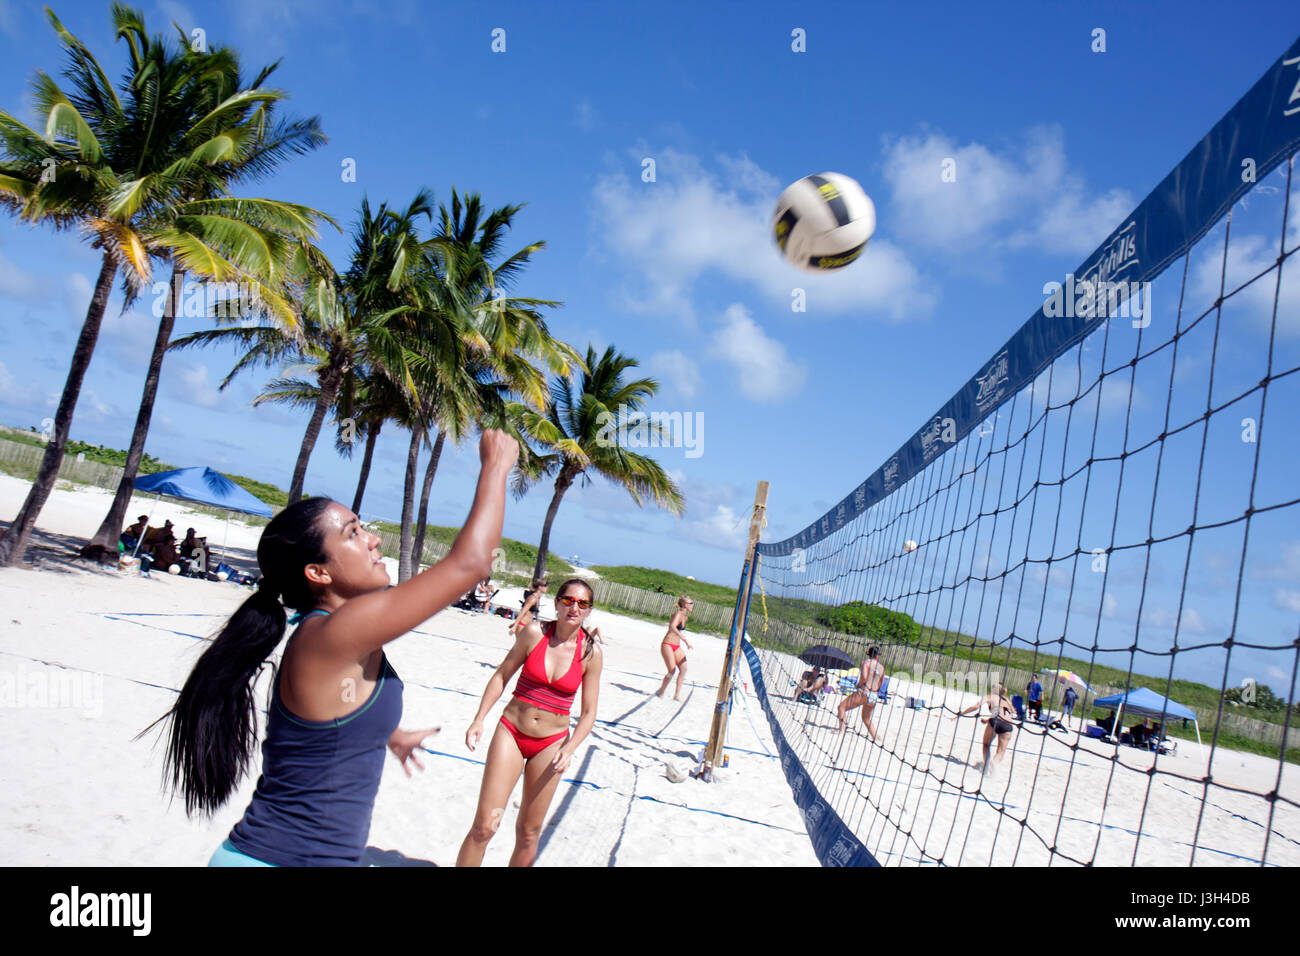 Miami Beach Florida,Lummus Park,beach volleyball competition,woman female women,sand,net,ball,sport,athlete,fitness,sun exposure,FL080913104 Stock Photo